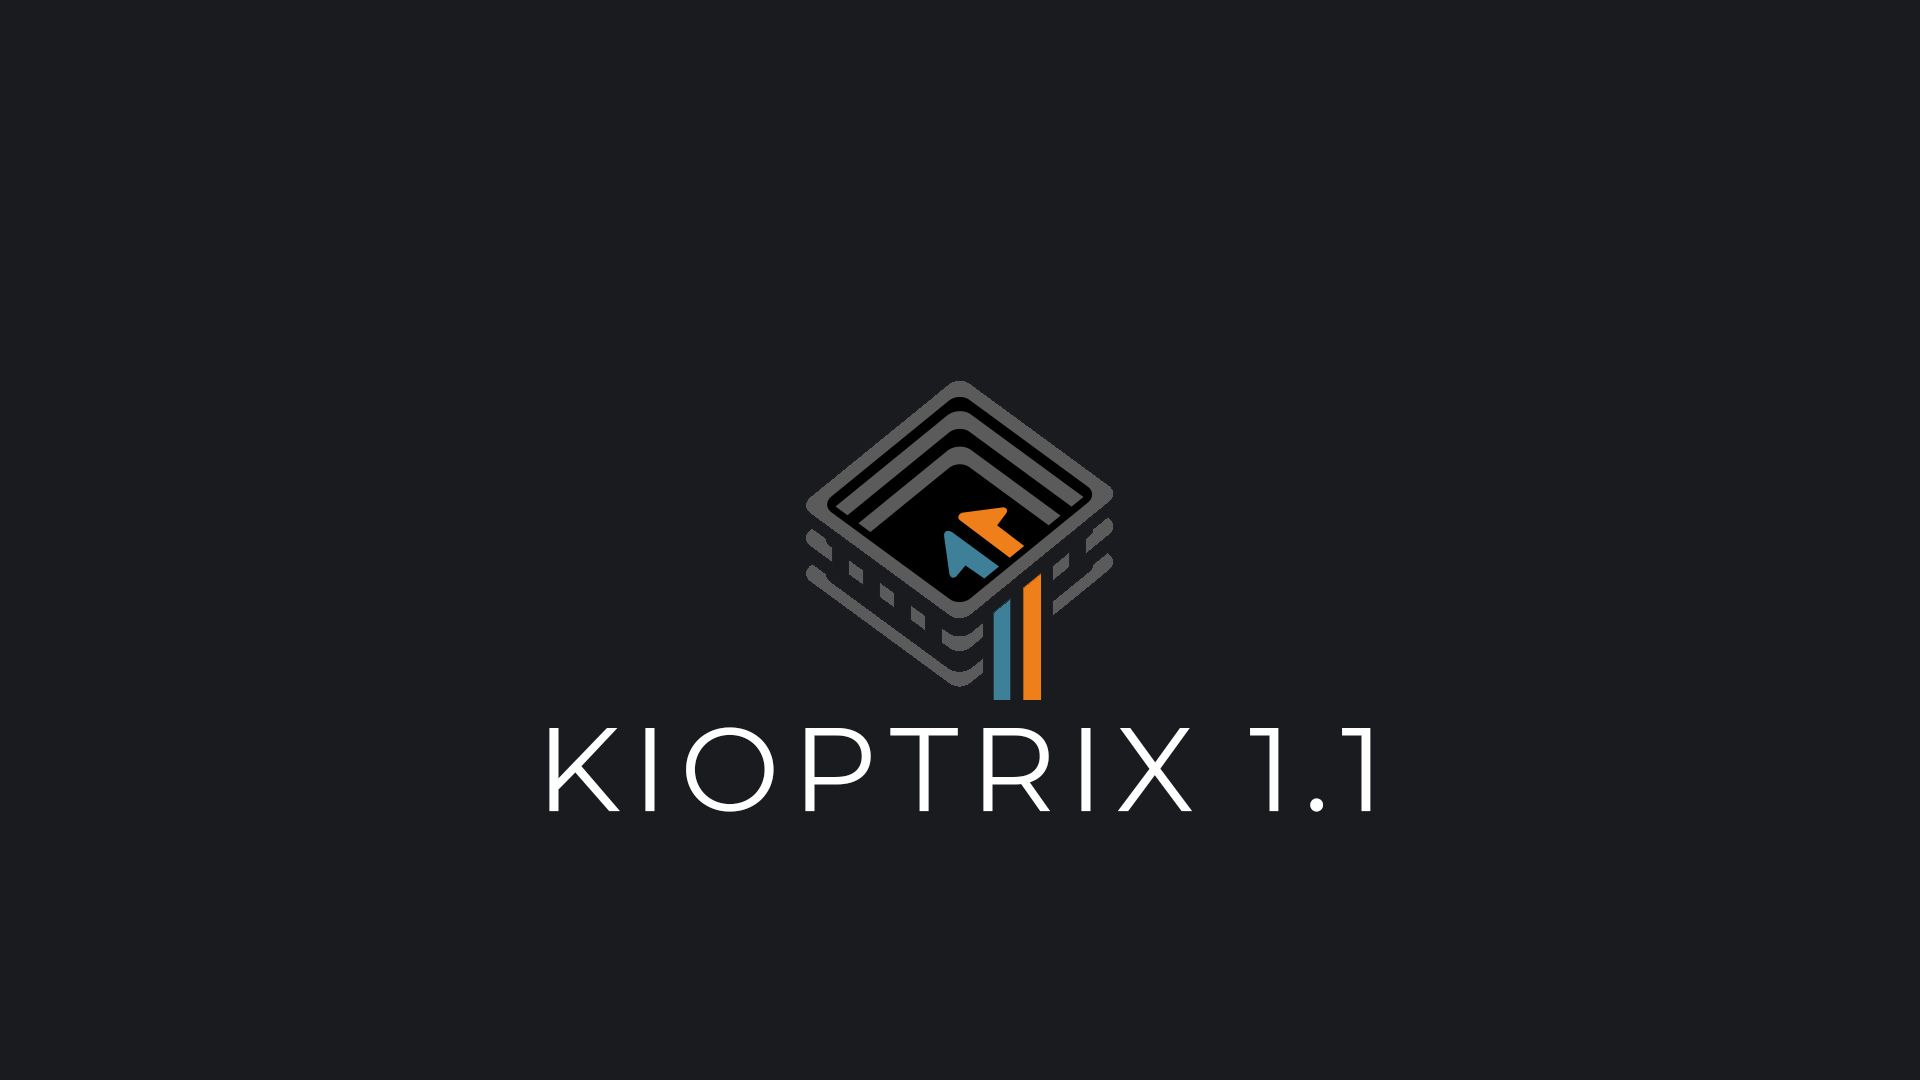 Kioptrix 1.1 ~ VulnHub